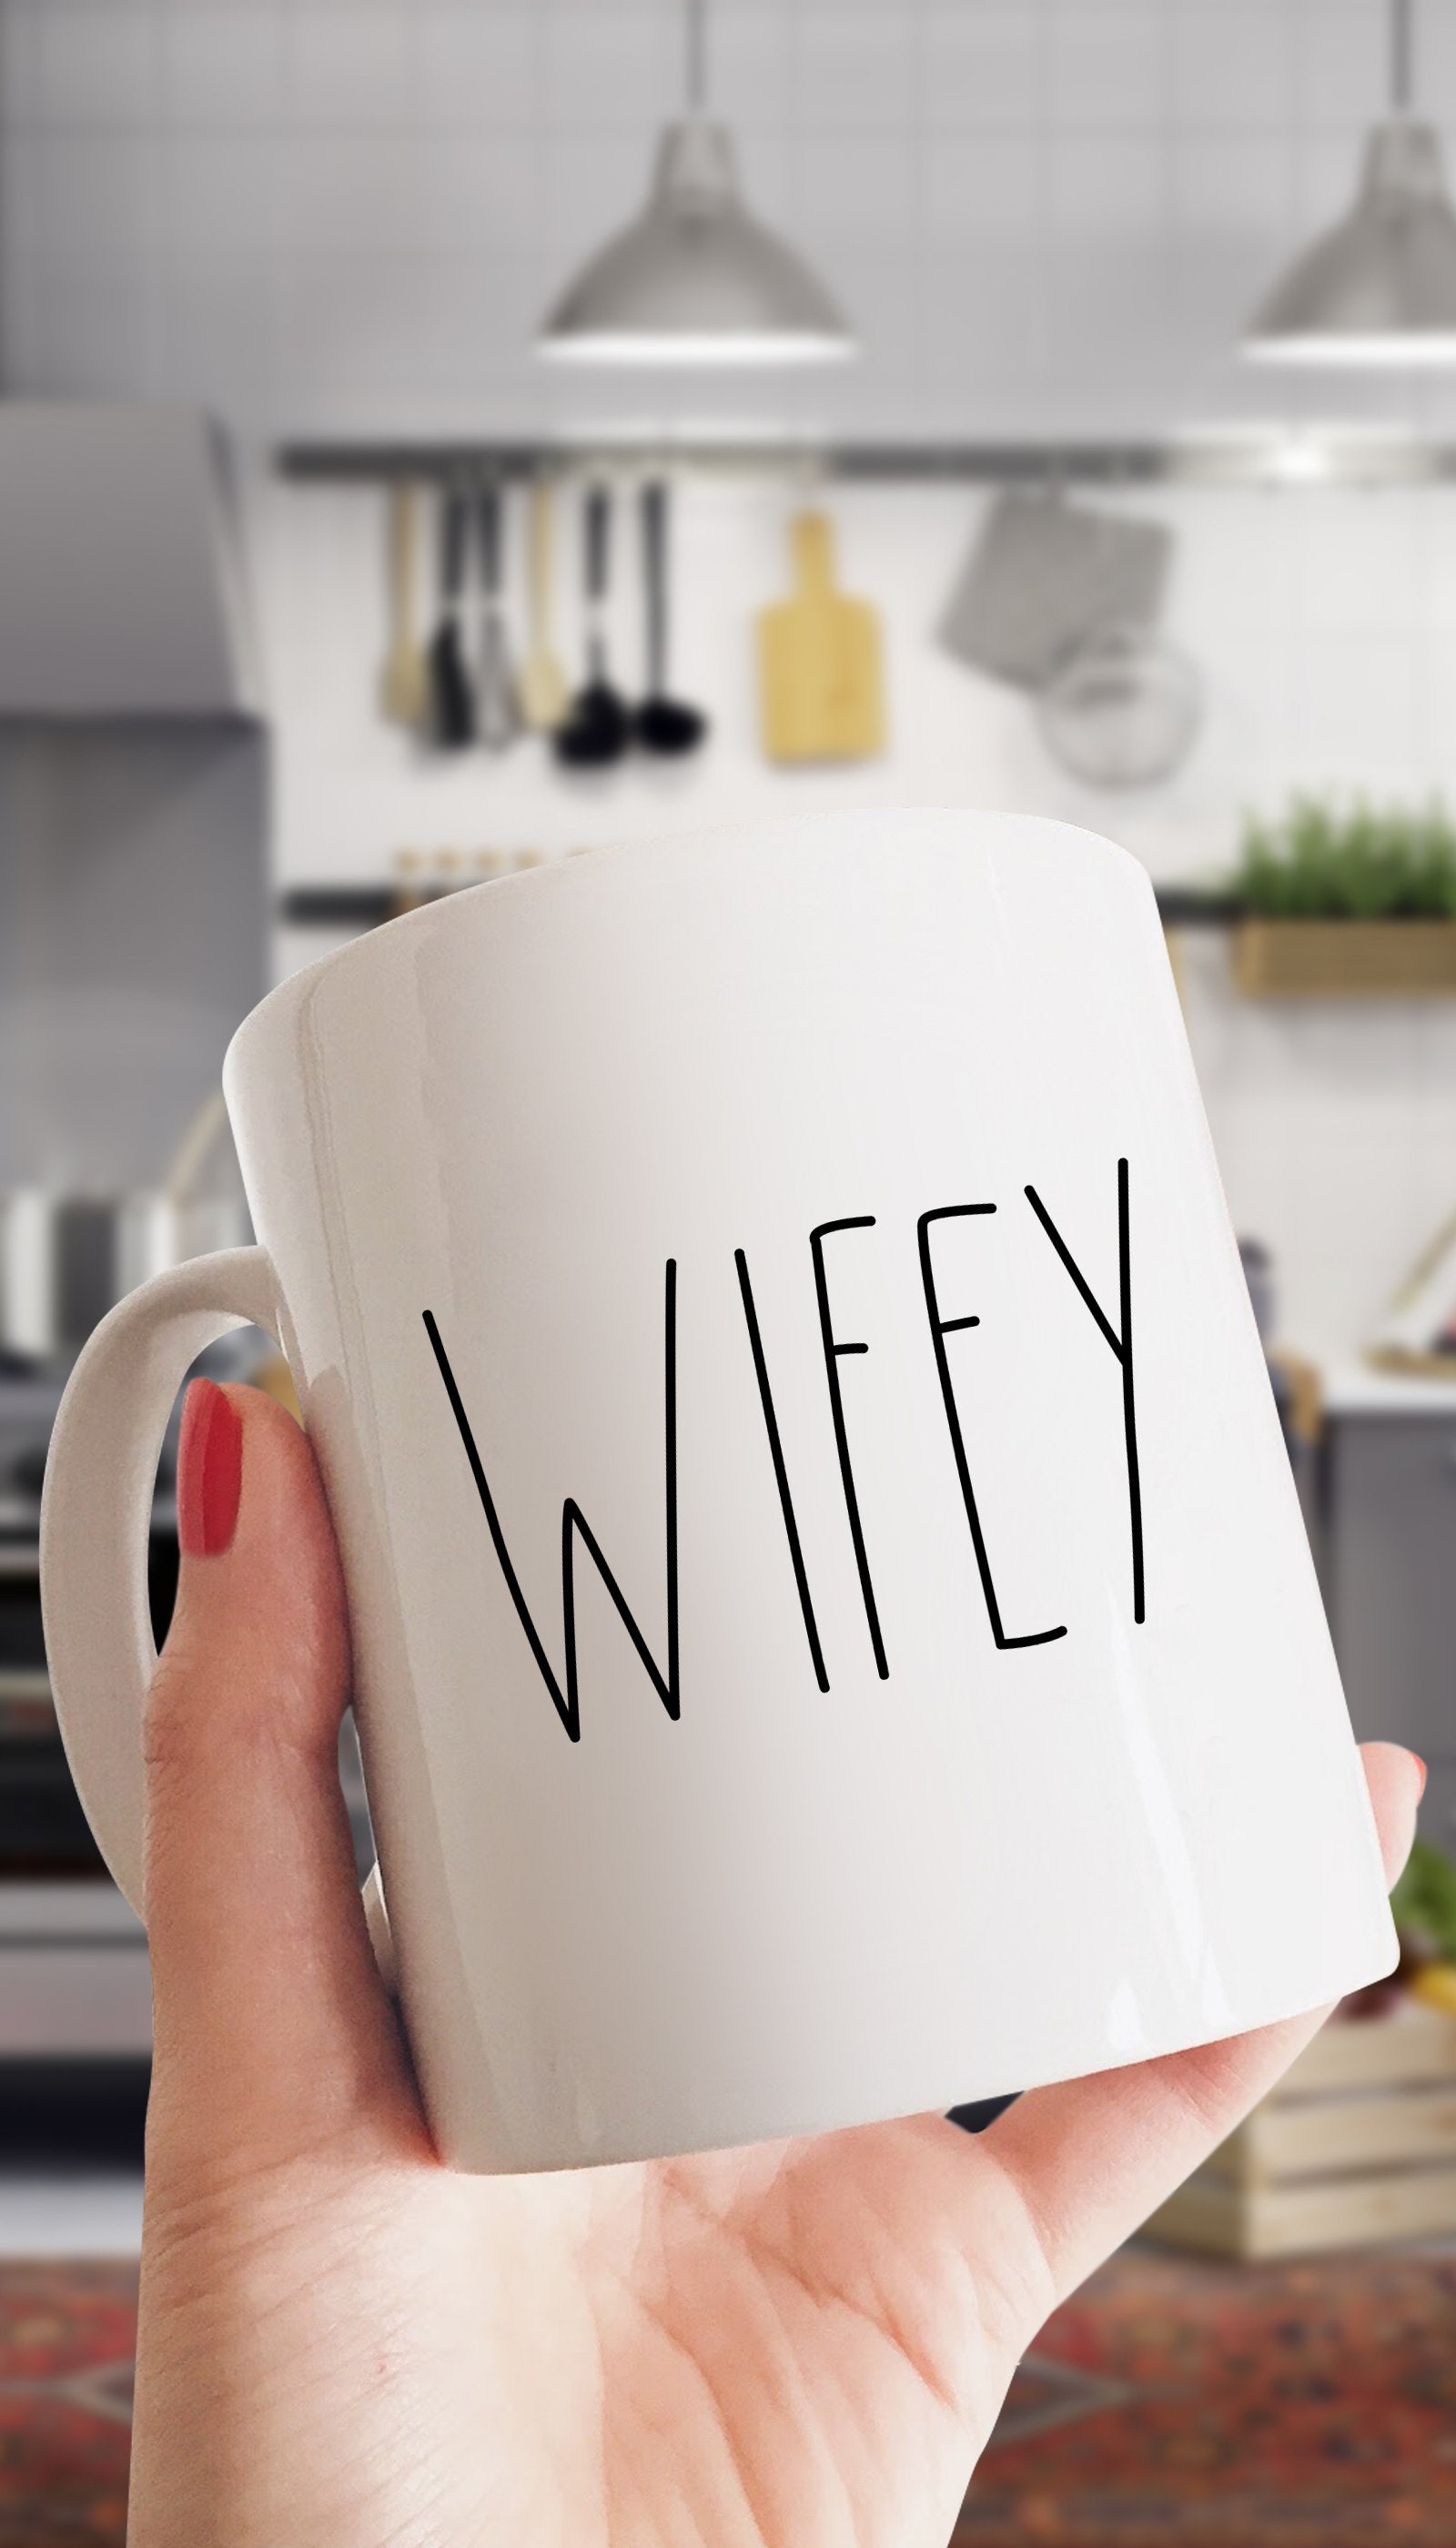 Wifey White Mug | Sarcastic Me